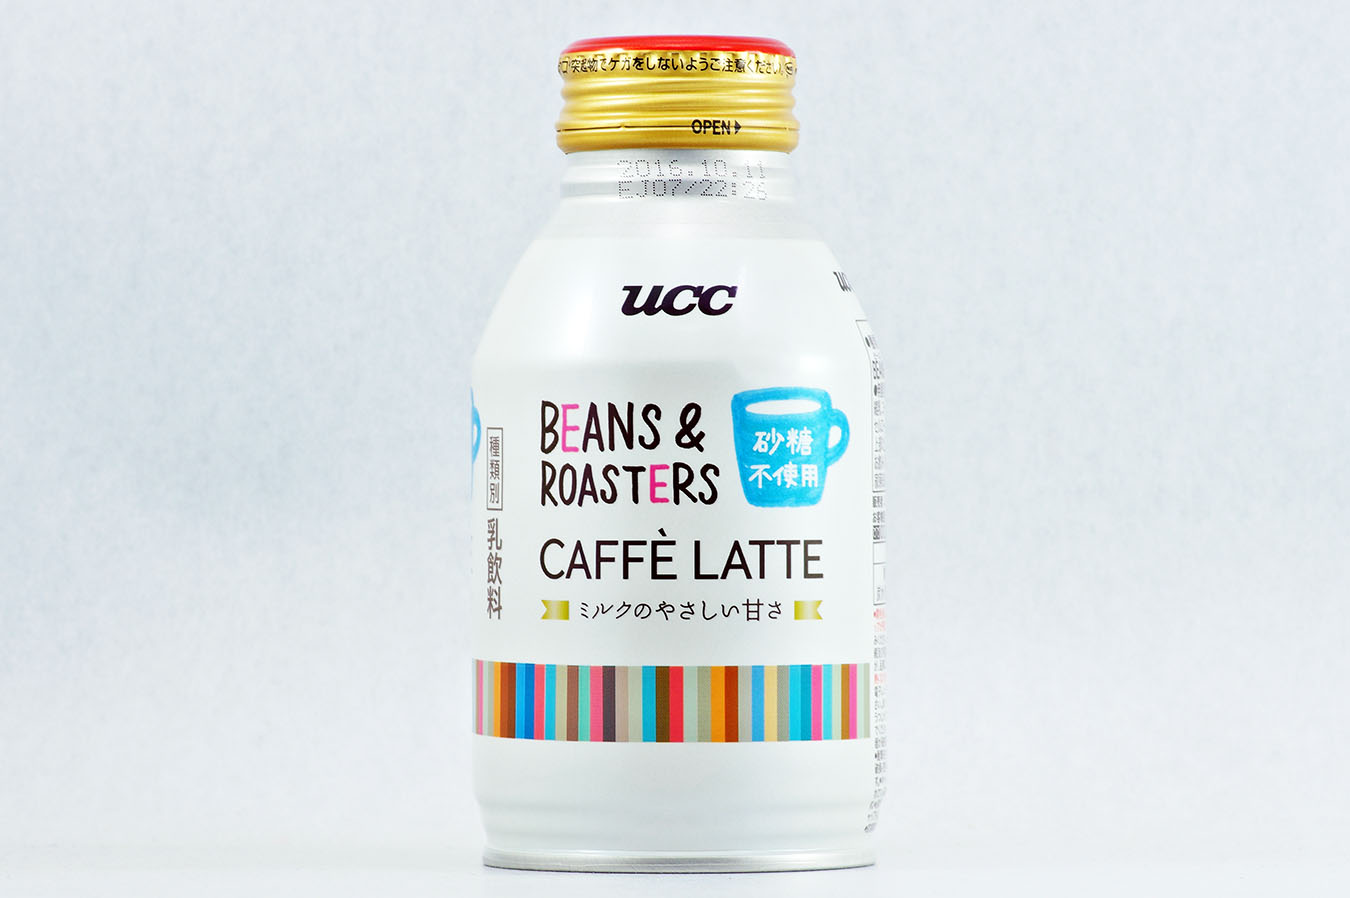 UCC BEANS & ROASTERS CAFFE LATTE 砂糖不使用 2015年11月